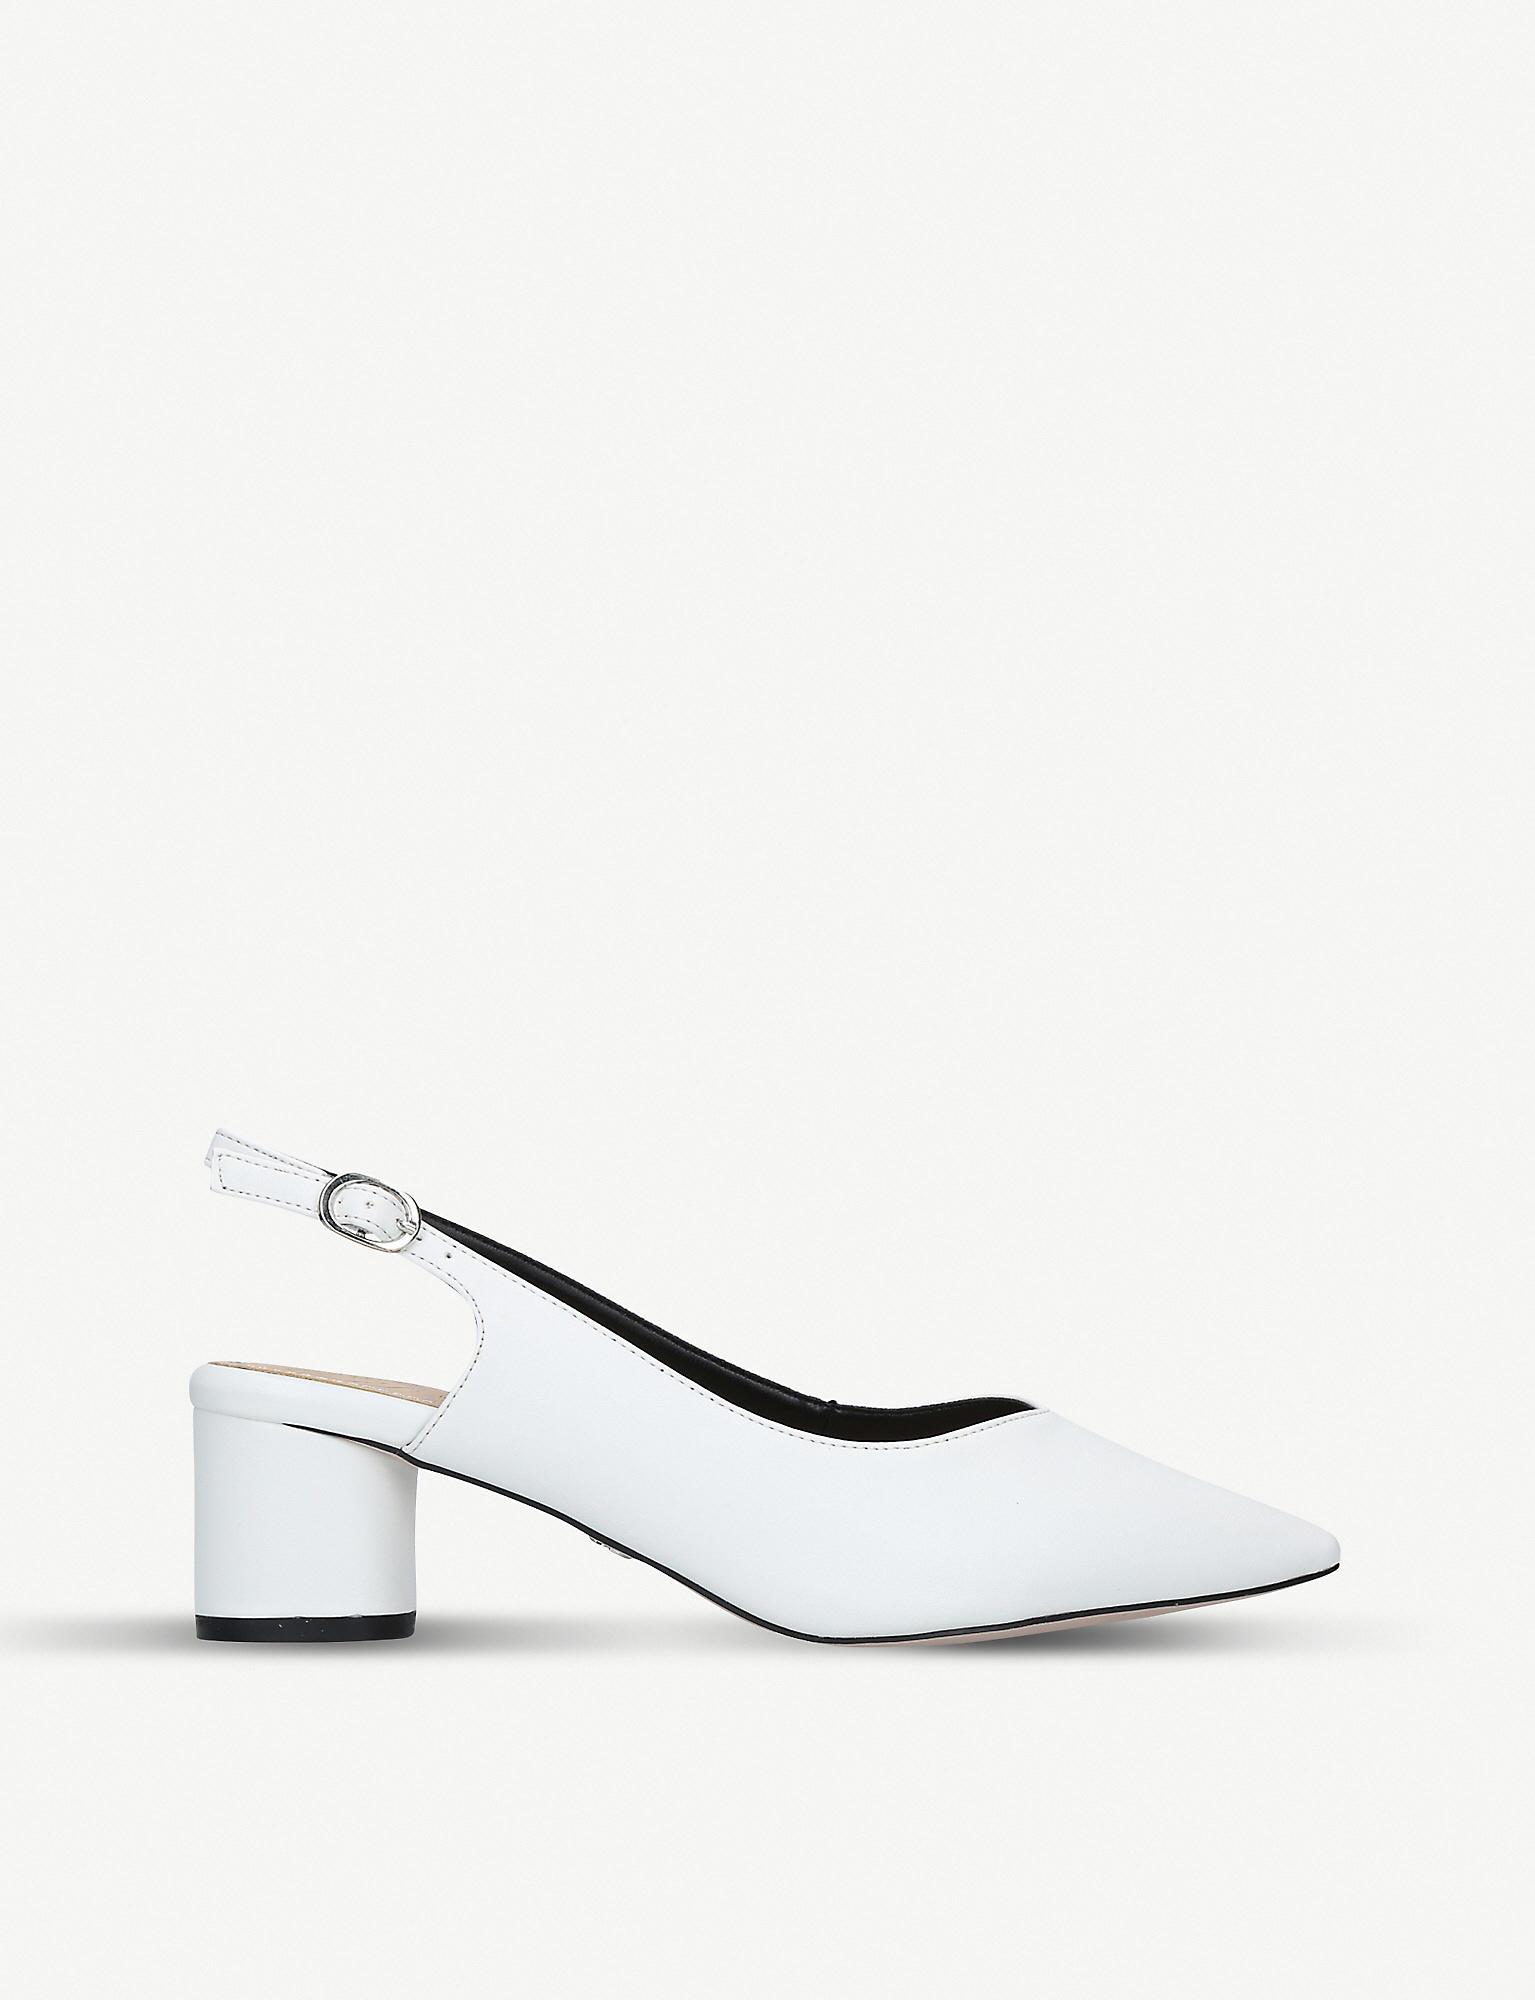 white block heel court shoes